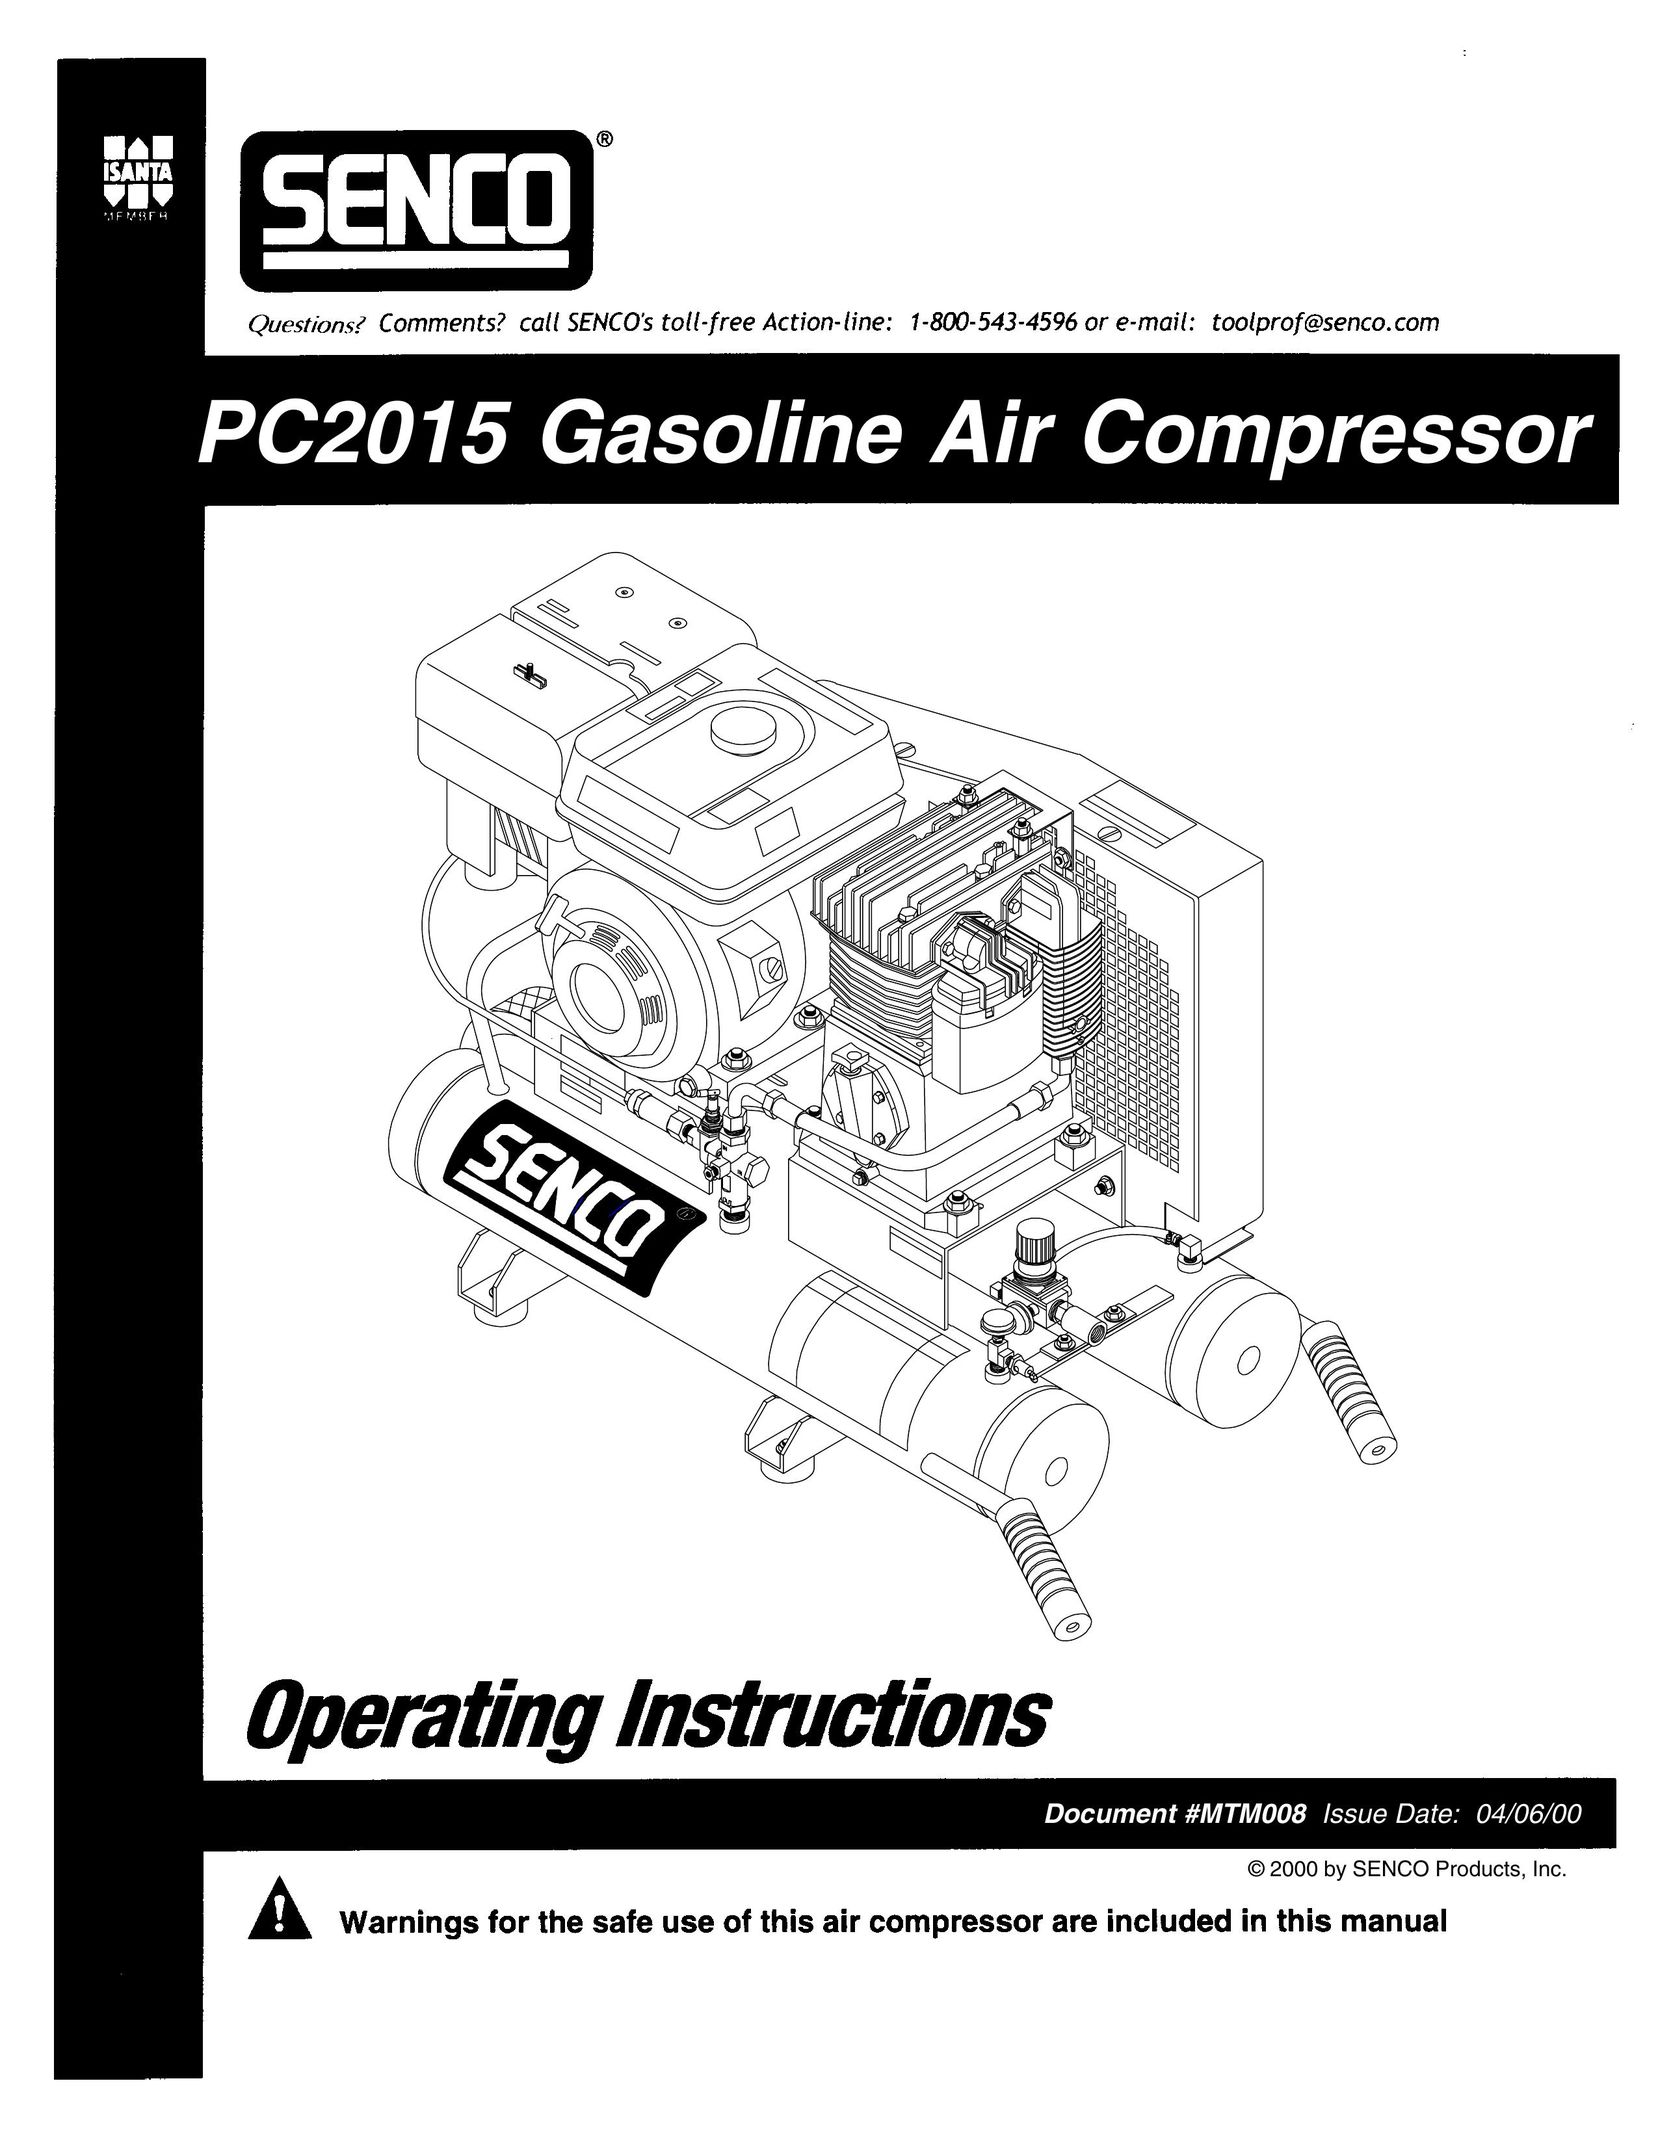 Senco PC2015 Air Compressor User Manual